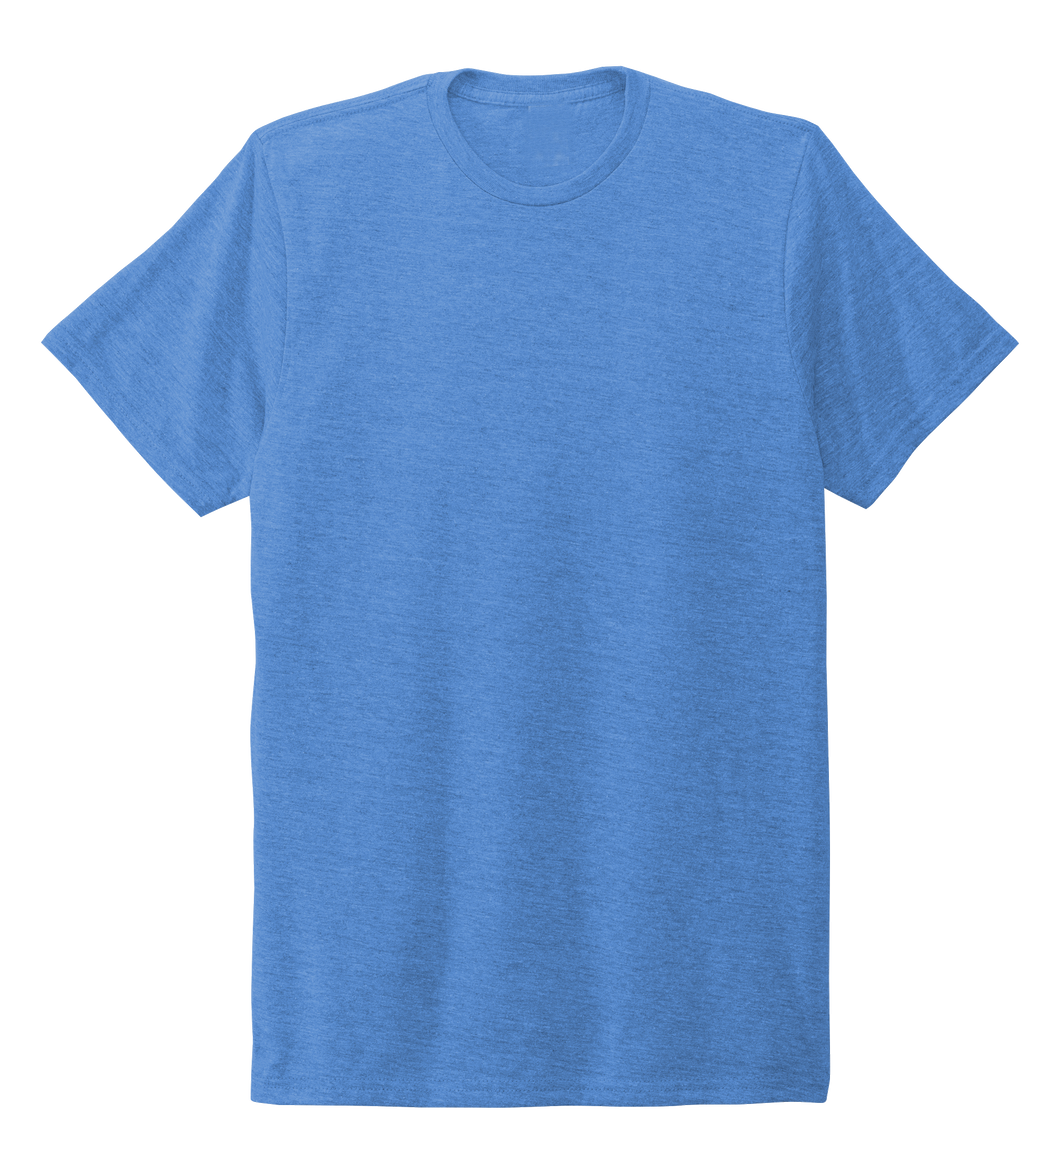 Unisex Crew Neck T-shirt in Sky Blue